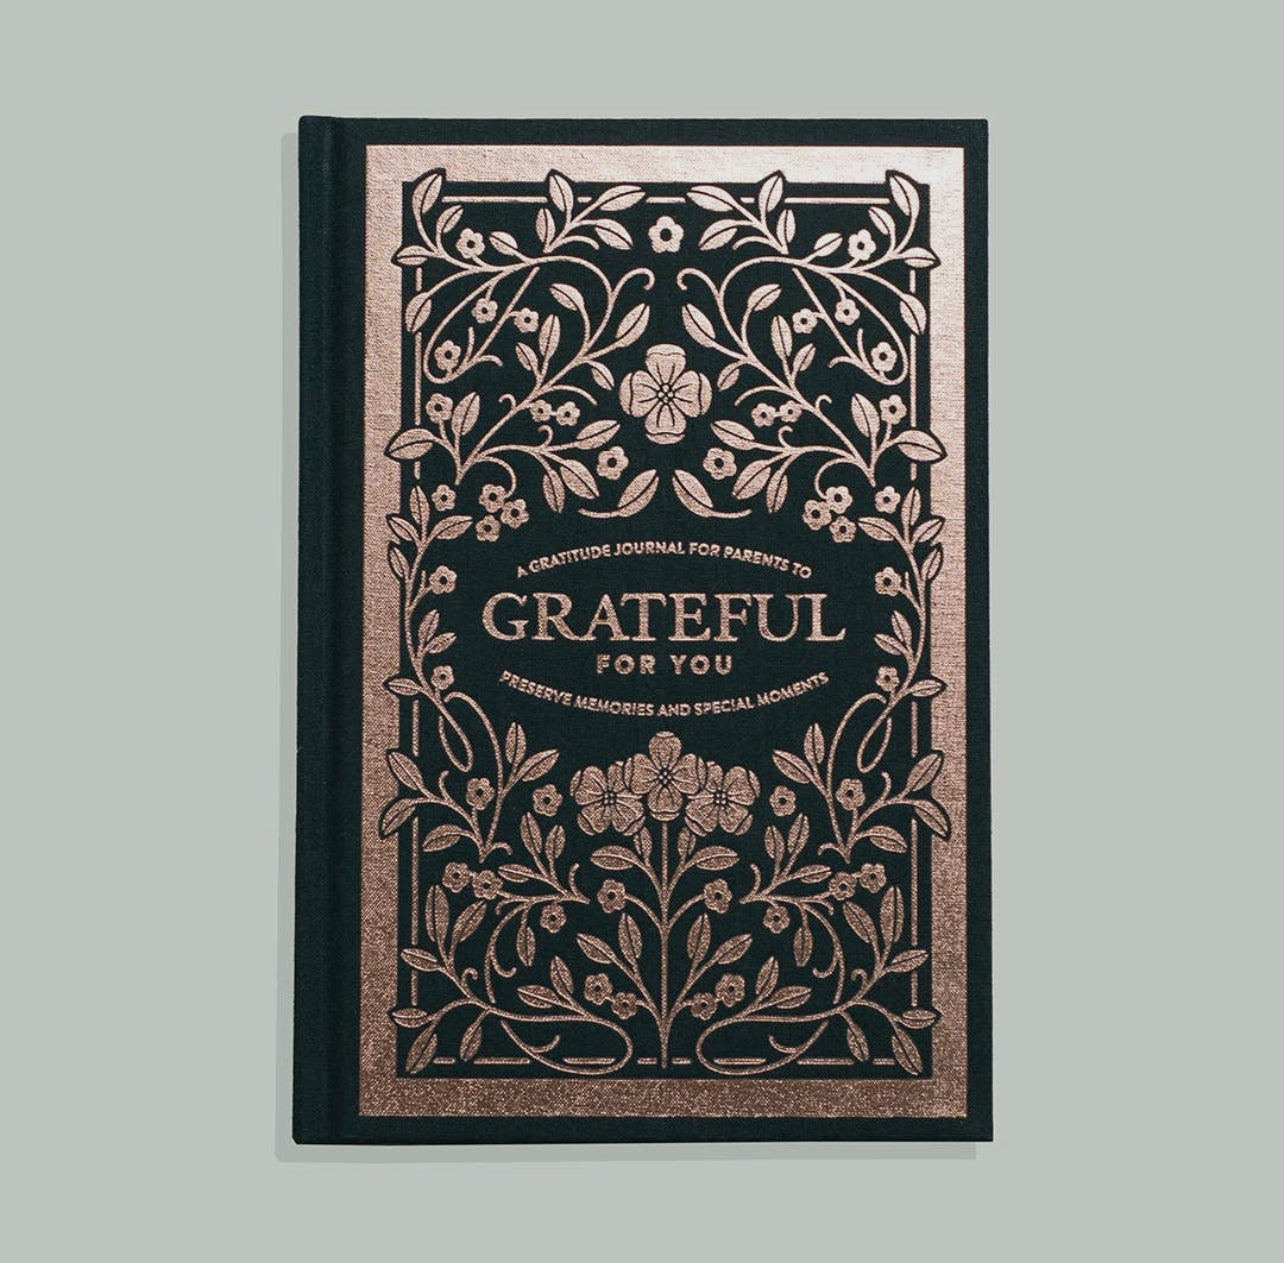 Grateful For You: Gratitude Journal for Parents